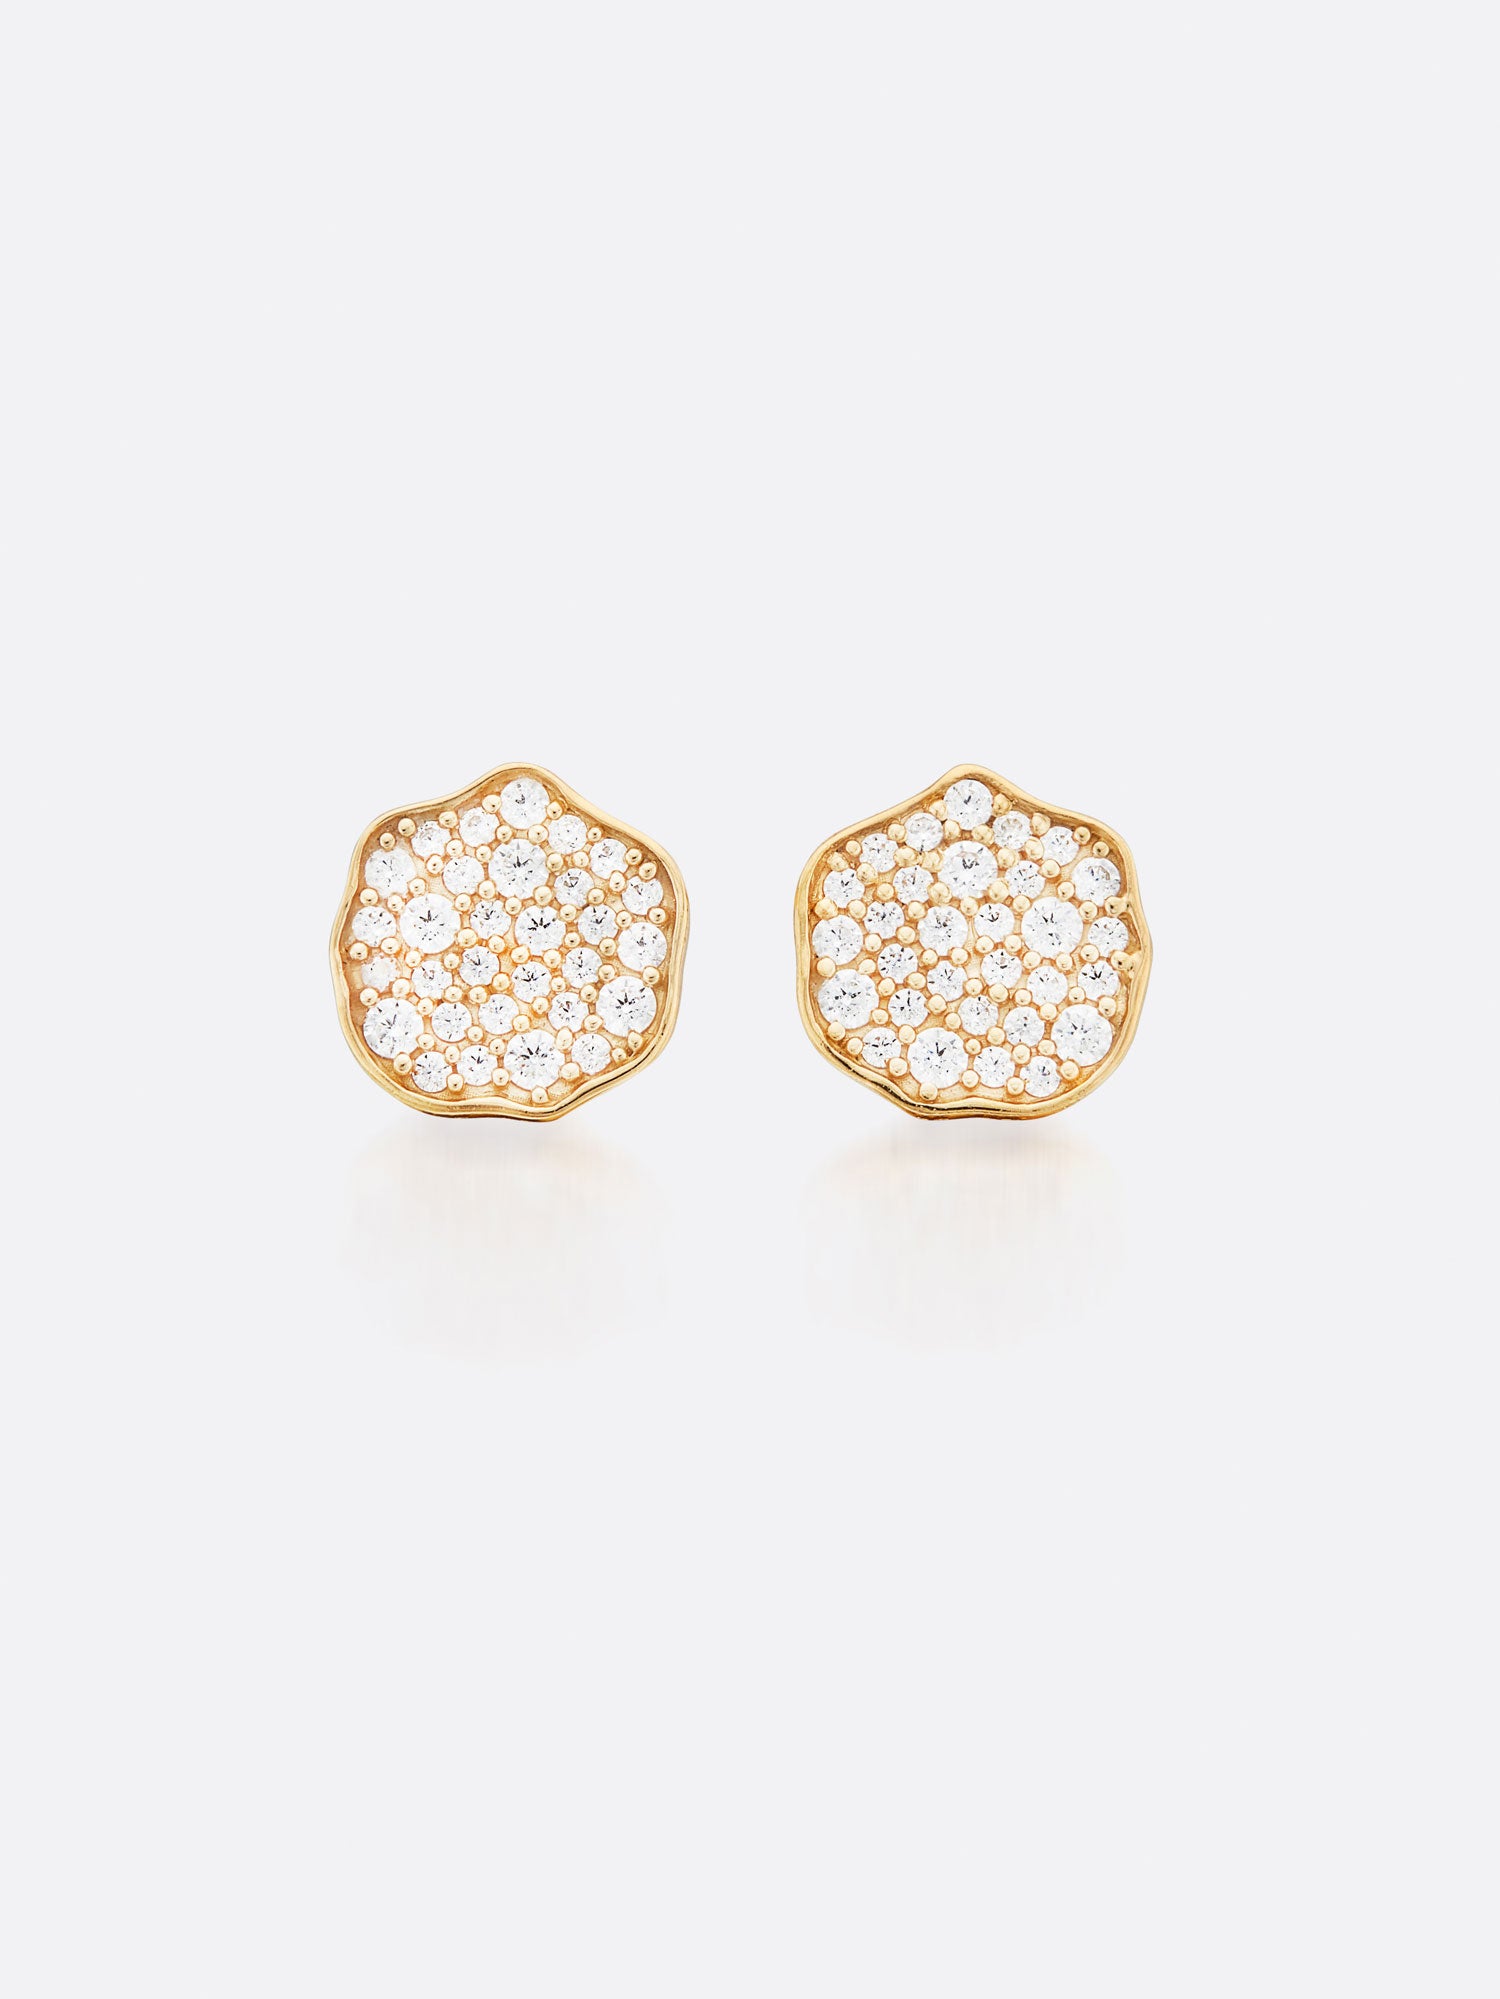 18k Yellow Gold pavé diamond mini stud earrings front view